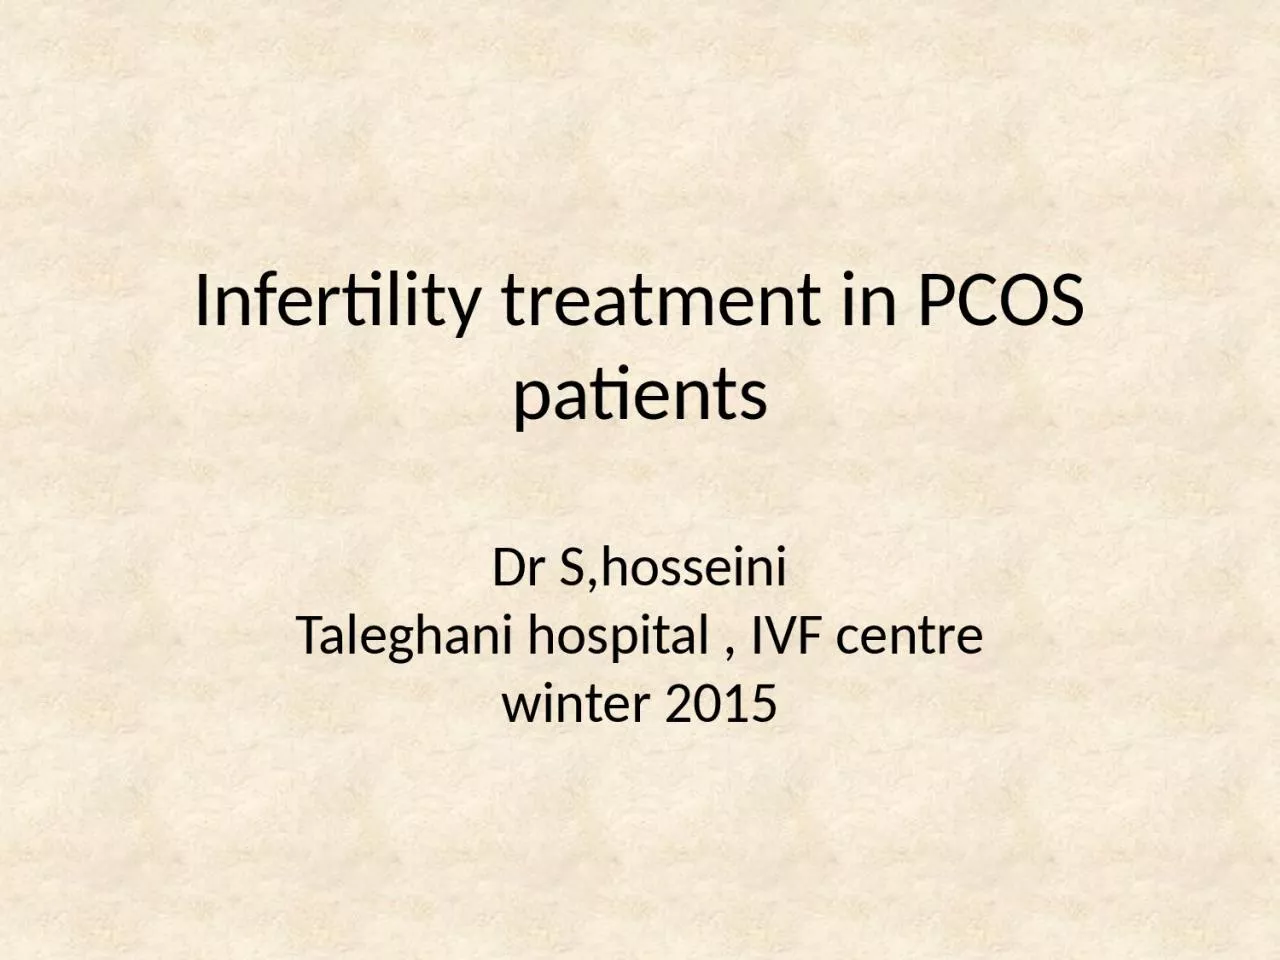 Infertility treatment in PCOS patients